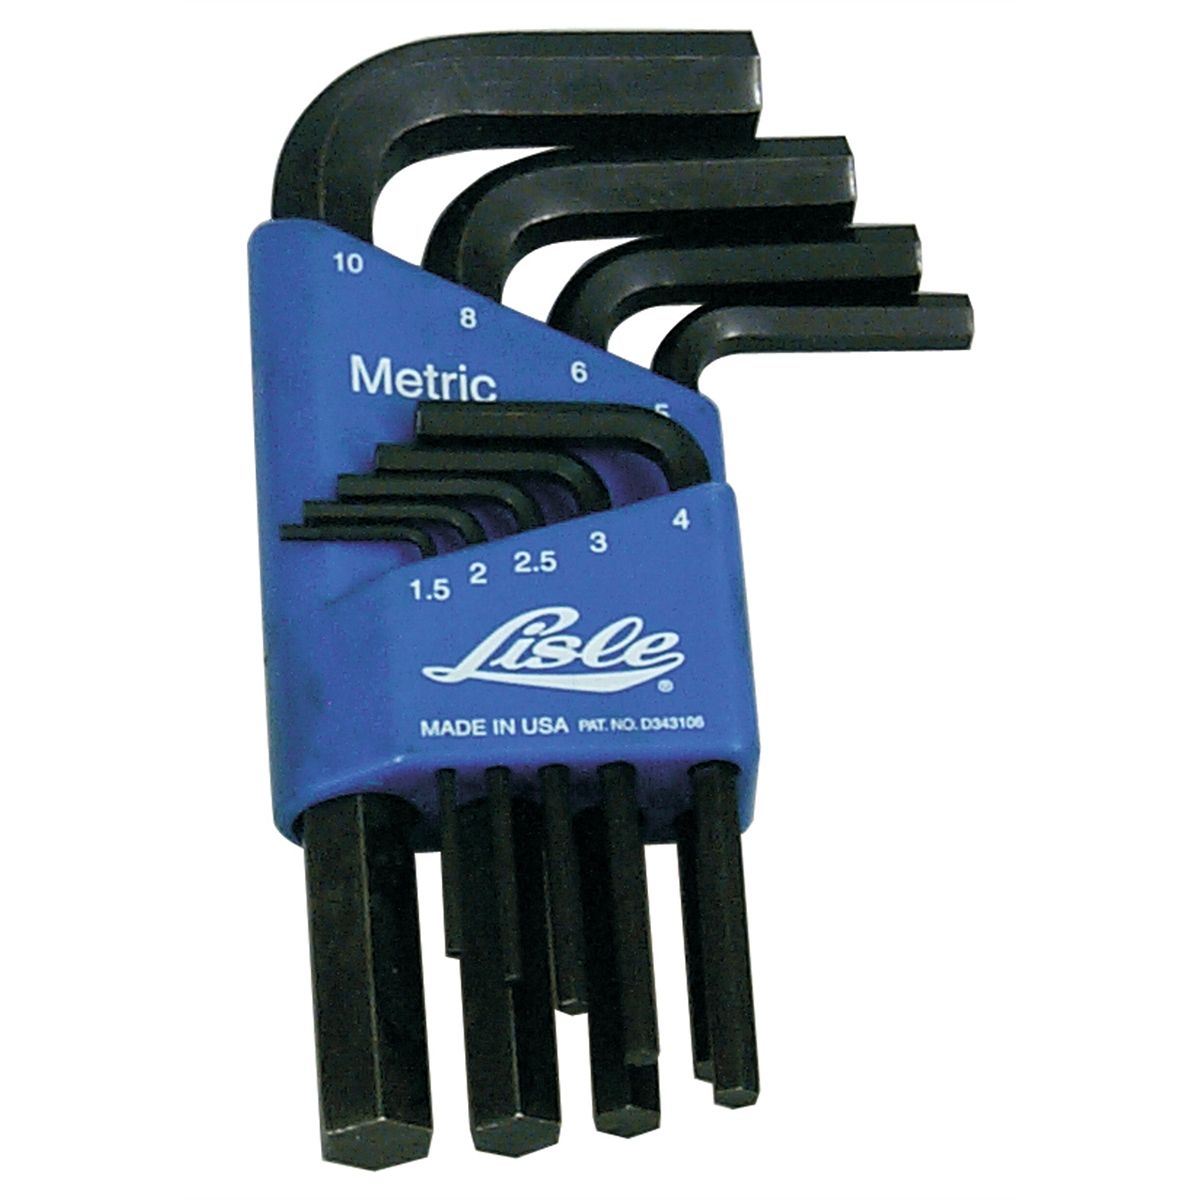 Metric Hex Key Set